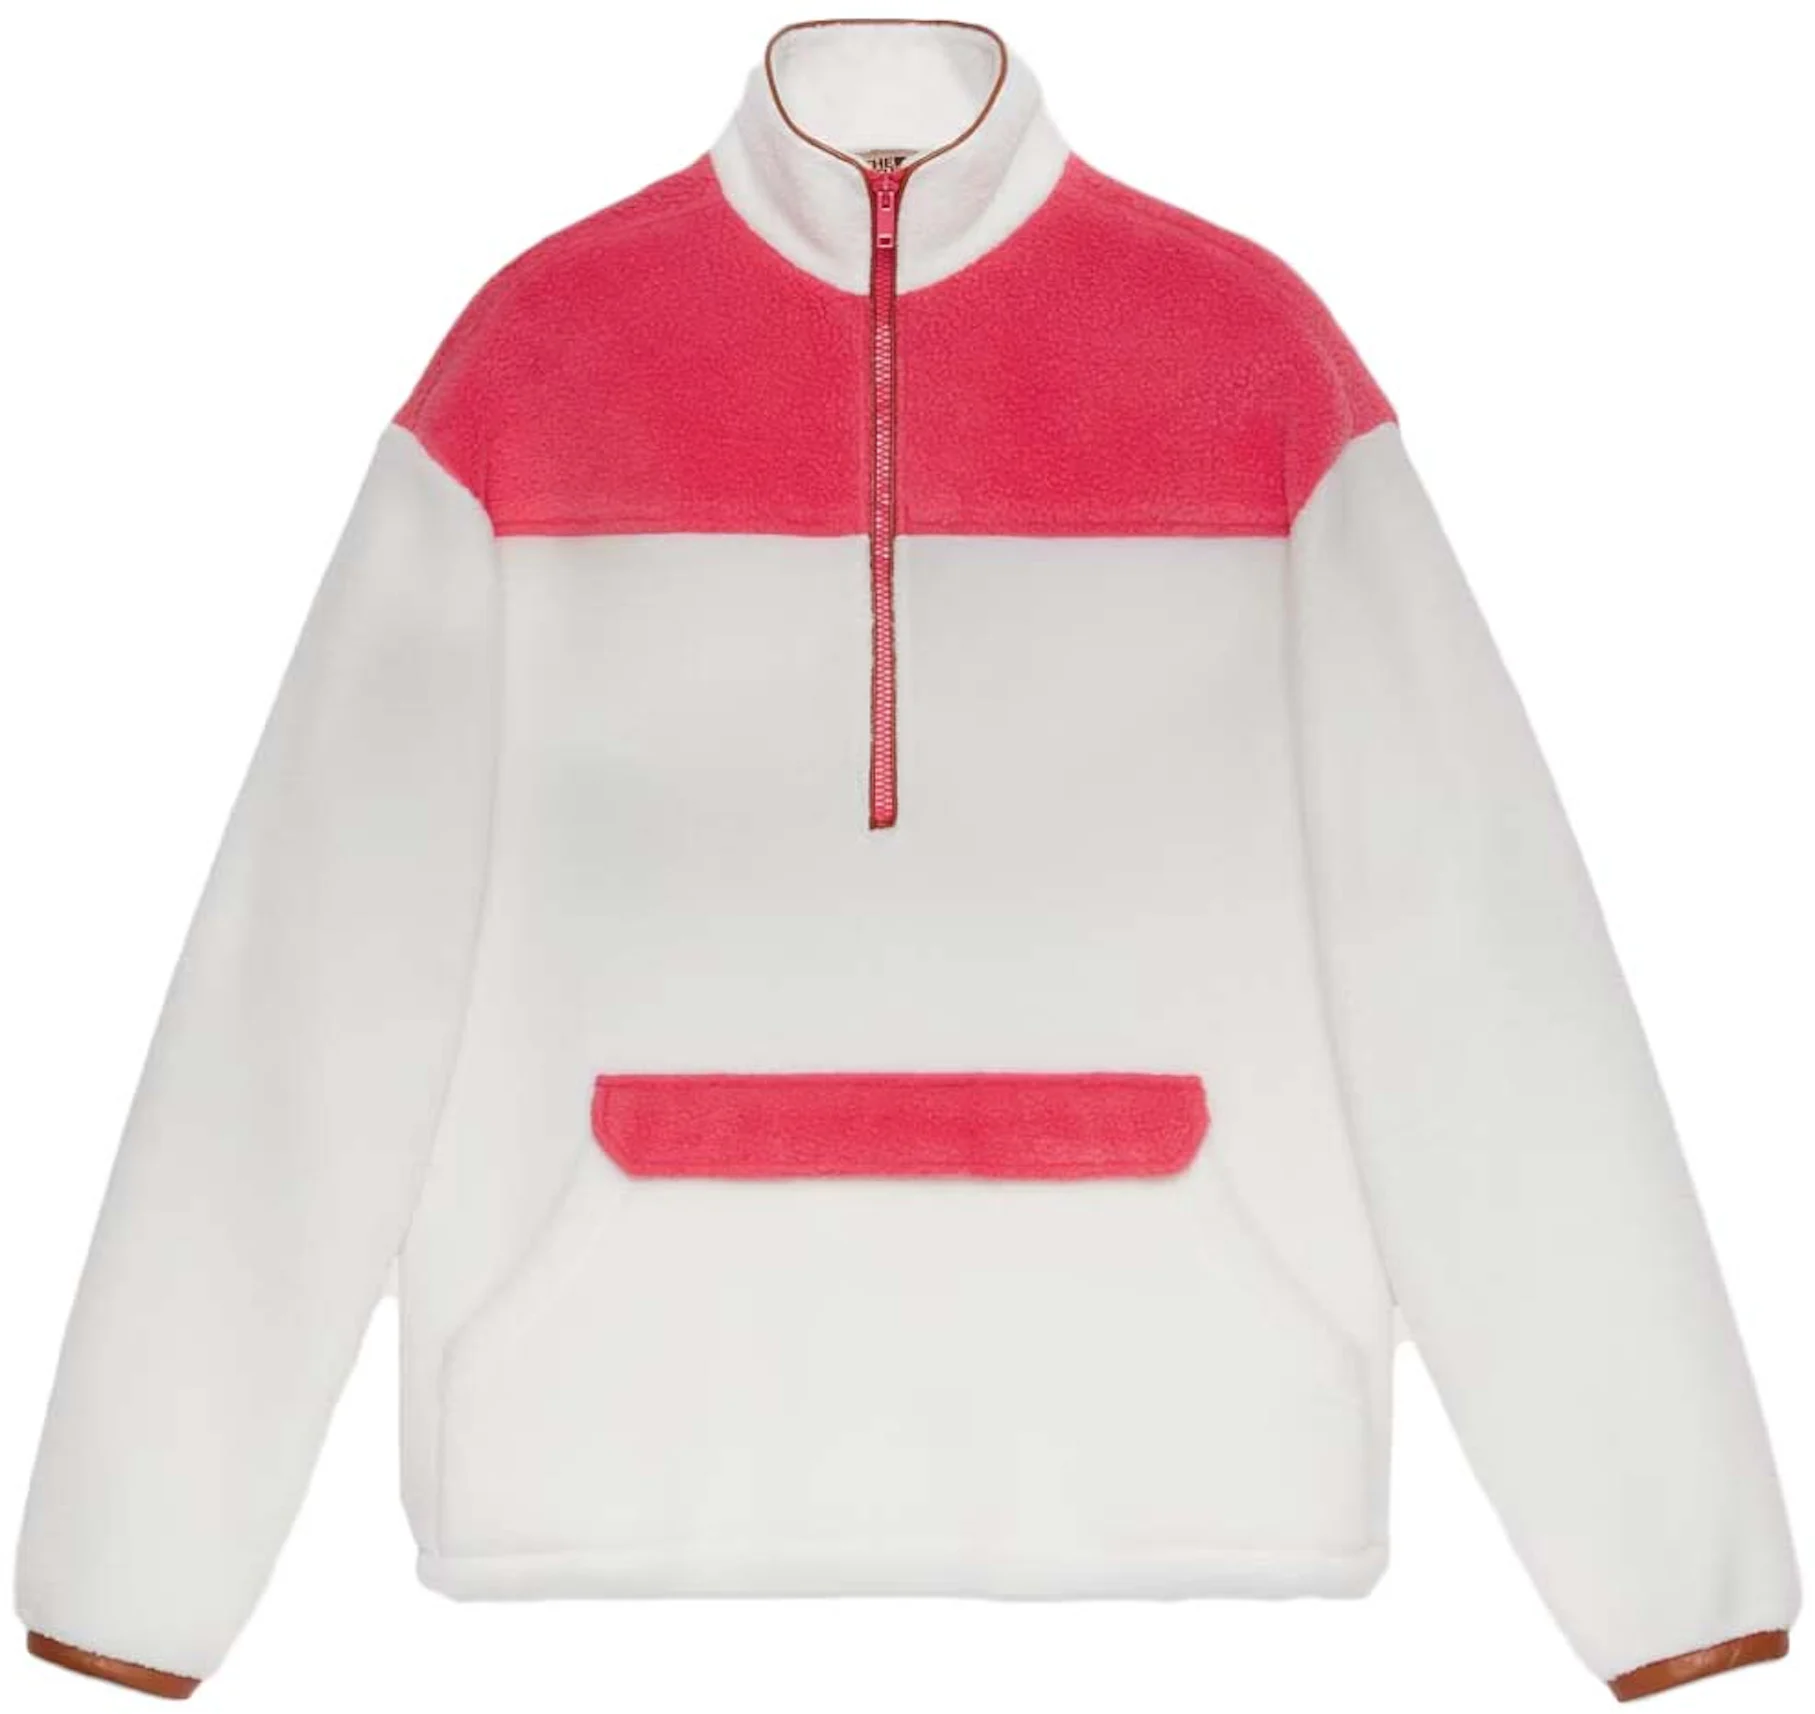 Gucci x The North Face Sweatshirt Off White/Dark Pink - FW22 - US